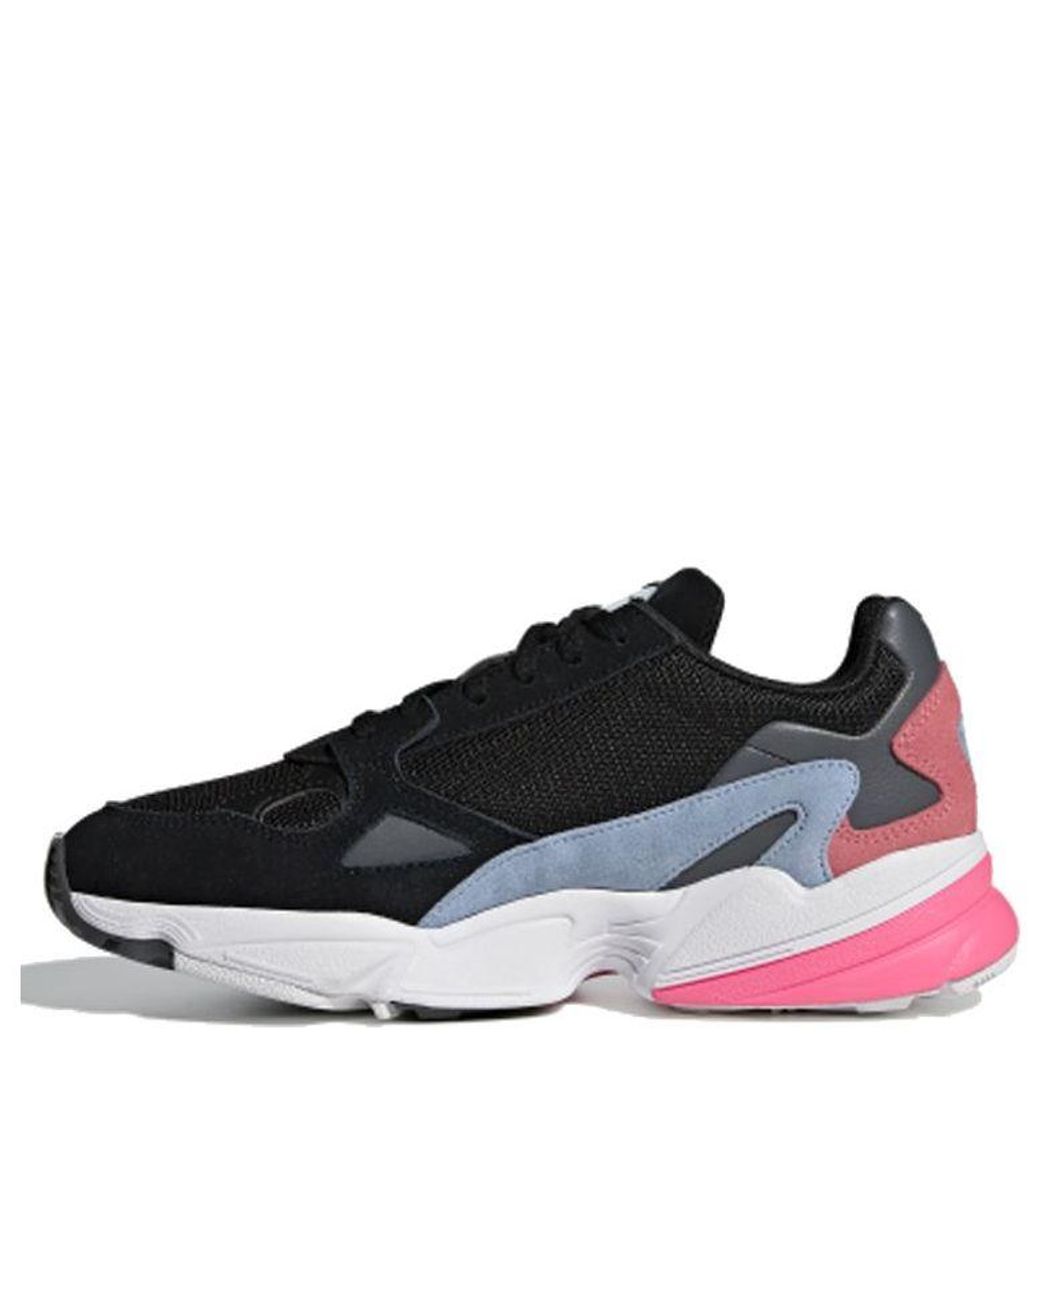 adidas Originals Falcon Shoes Black/pink | Lyst